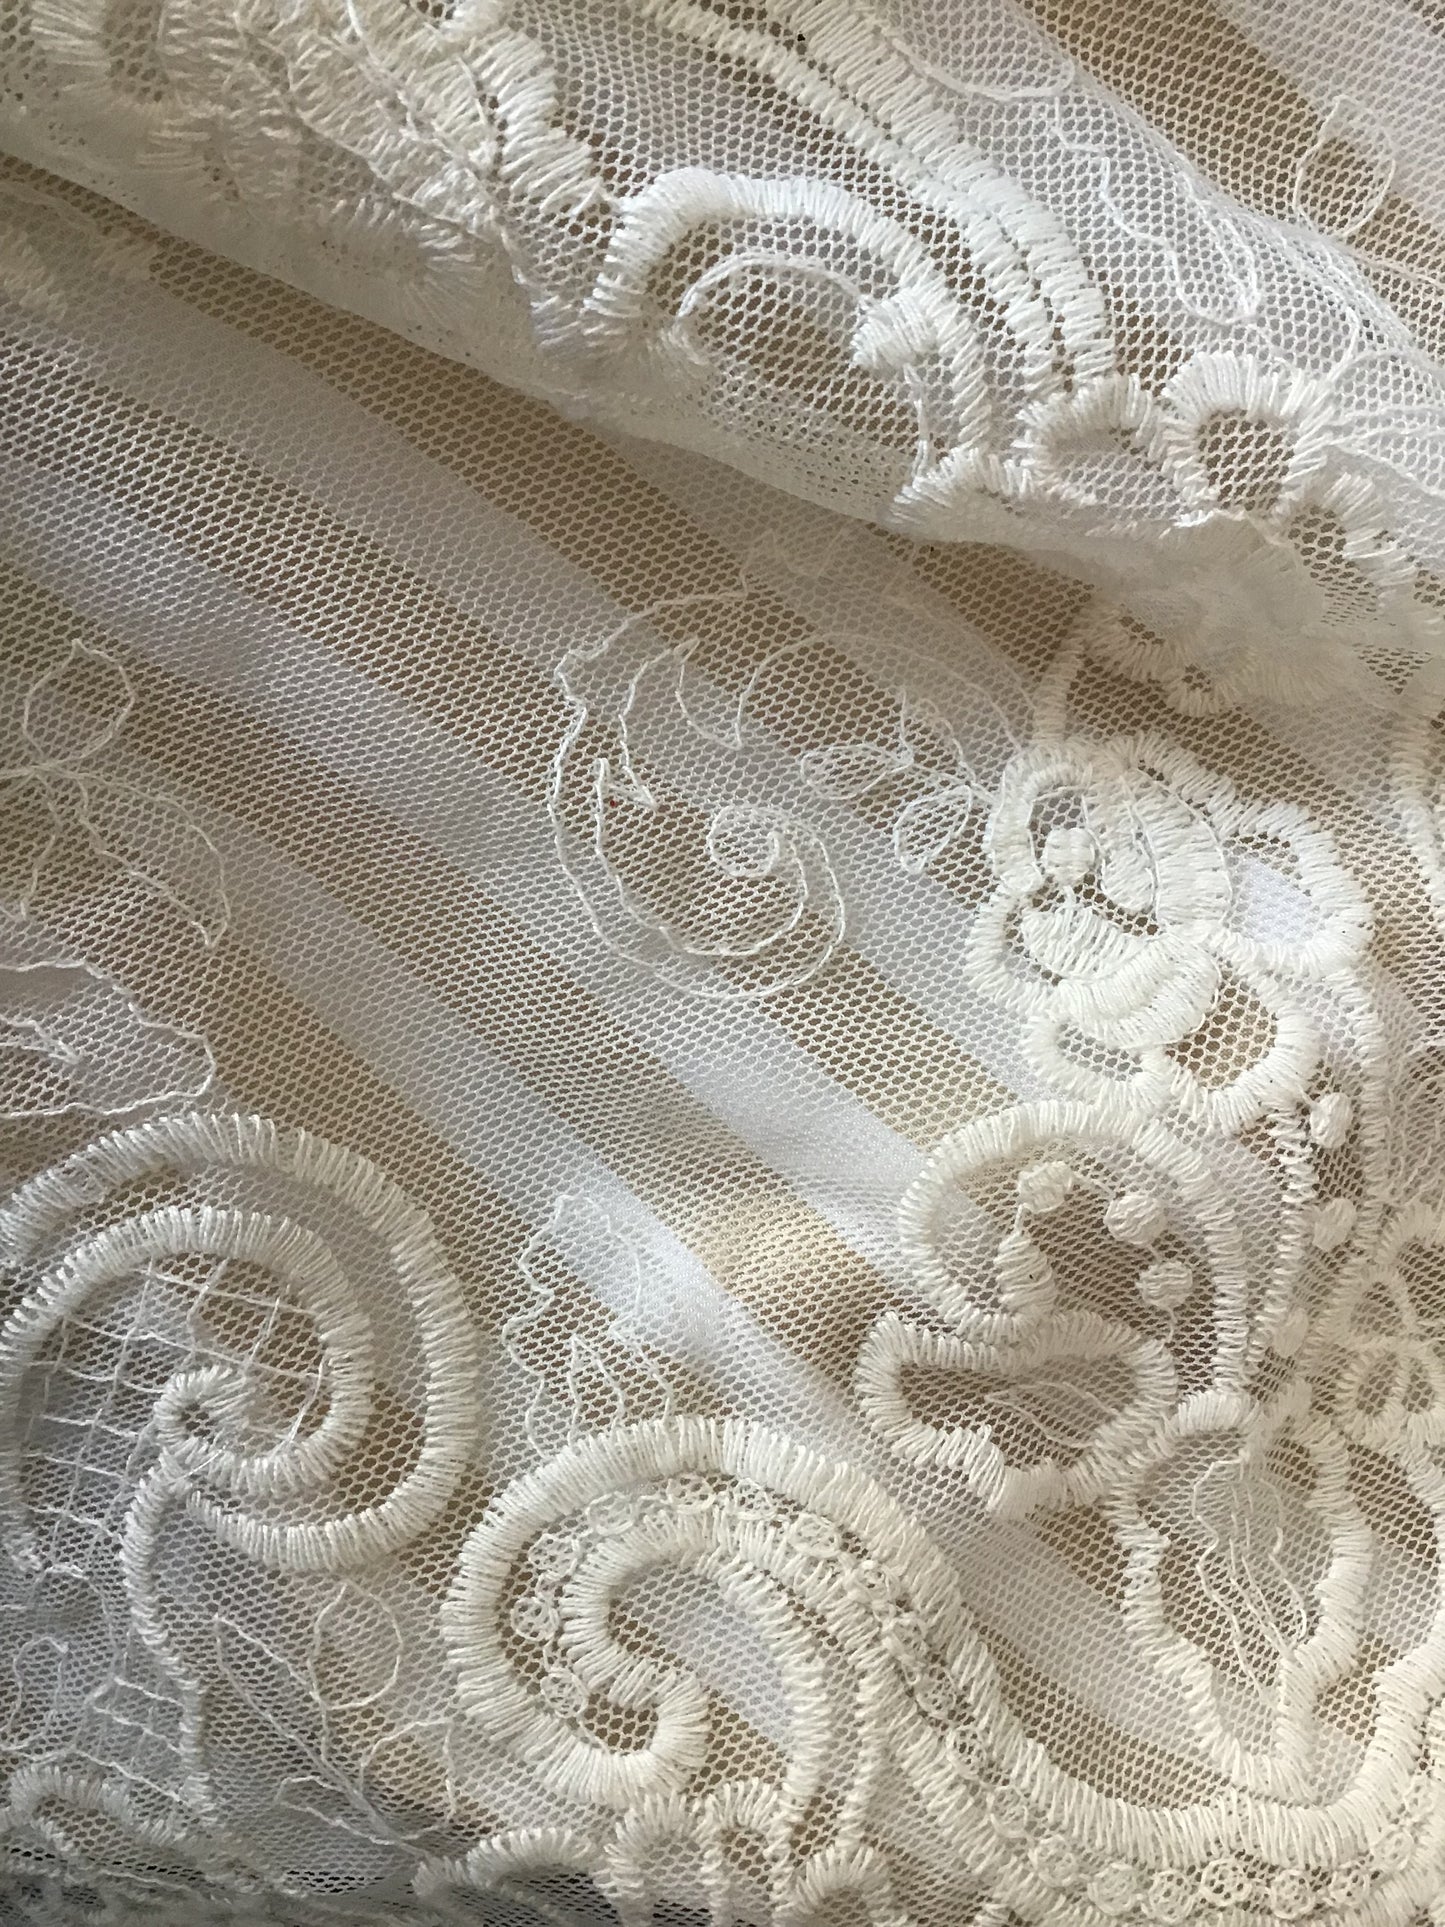 JUNNY® SS22 collaboration ecru lace with striped silk taffeta